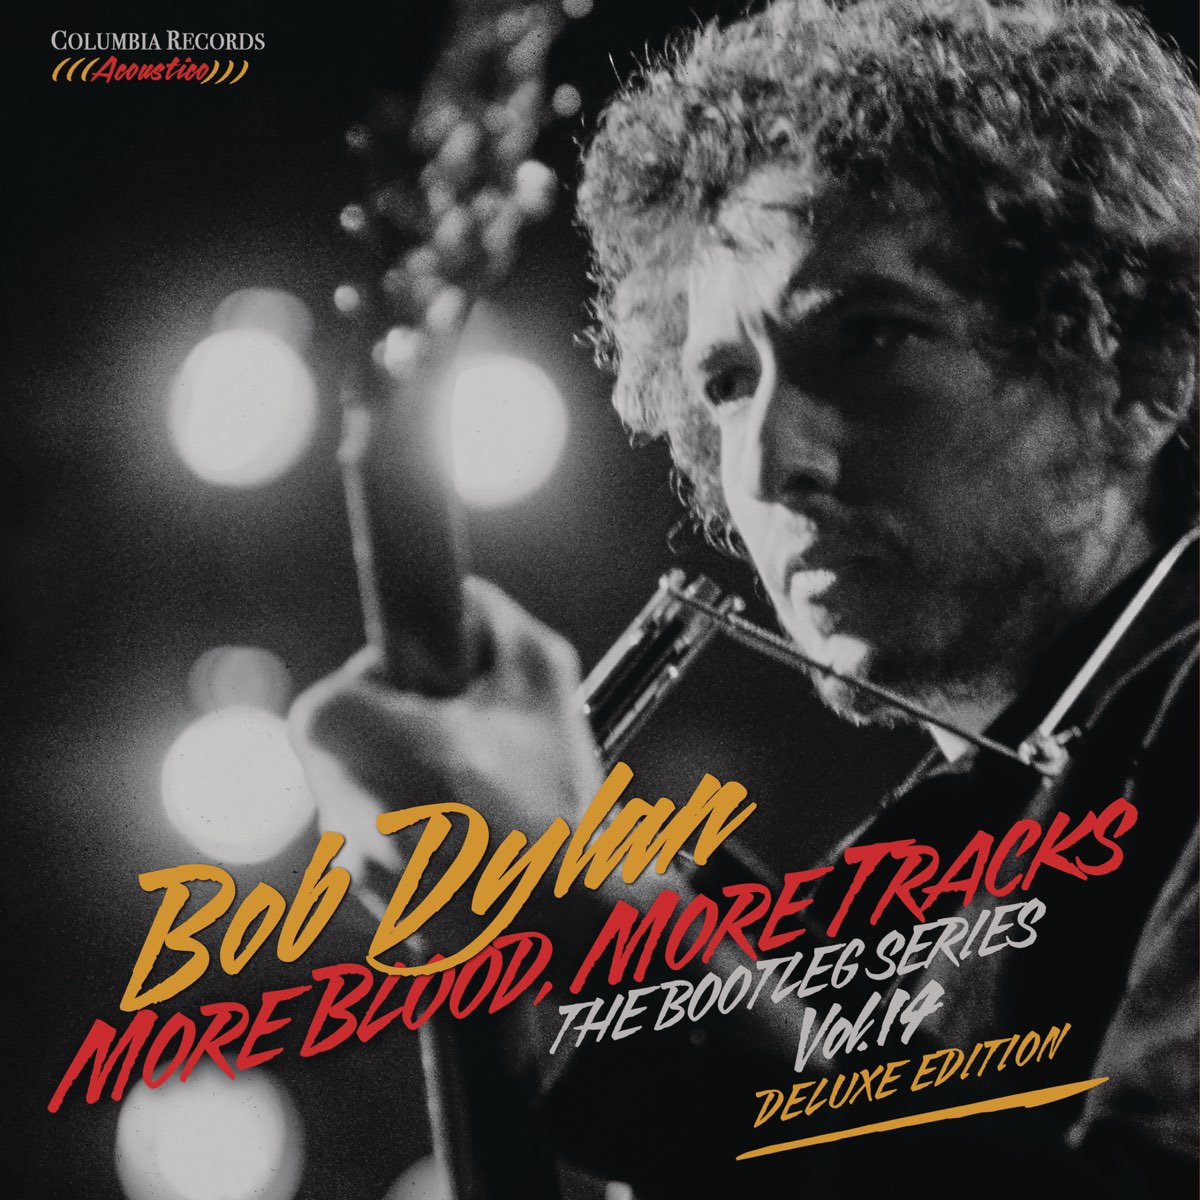 Dylan, Bob: More Blood, More Tracks - The Bootleg Series Vol.14 (Vinyl 2xLP)